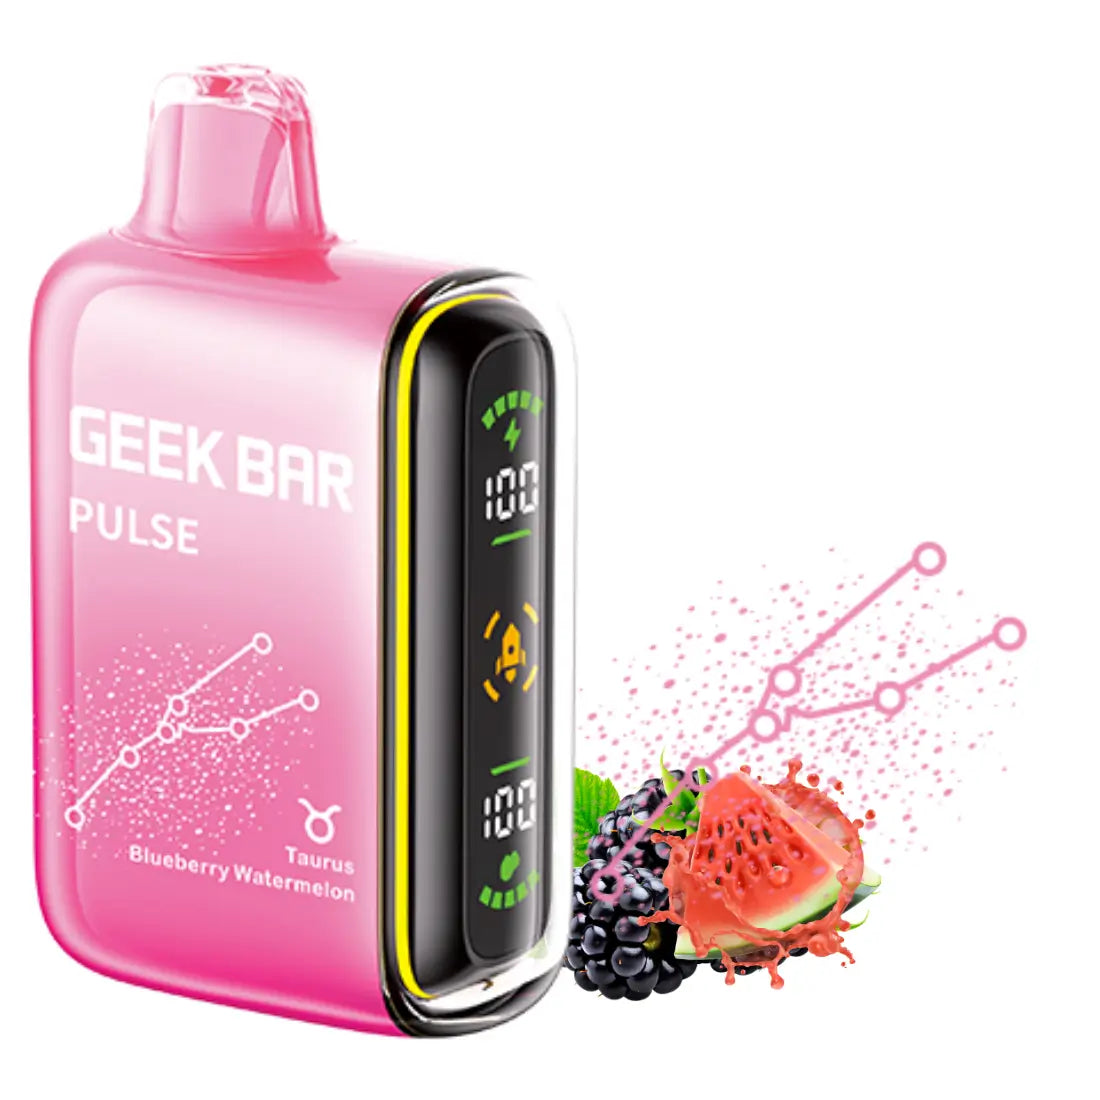 Geek Bar Pulse California Blueberry Watermelon